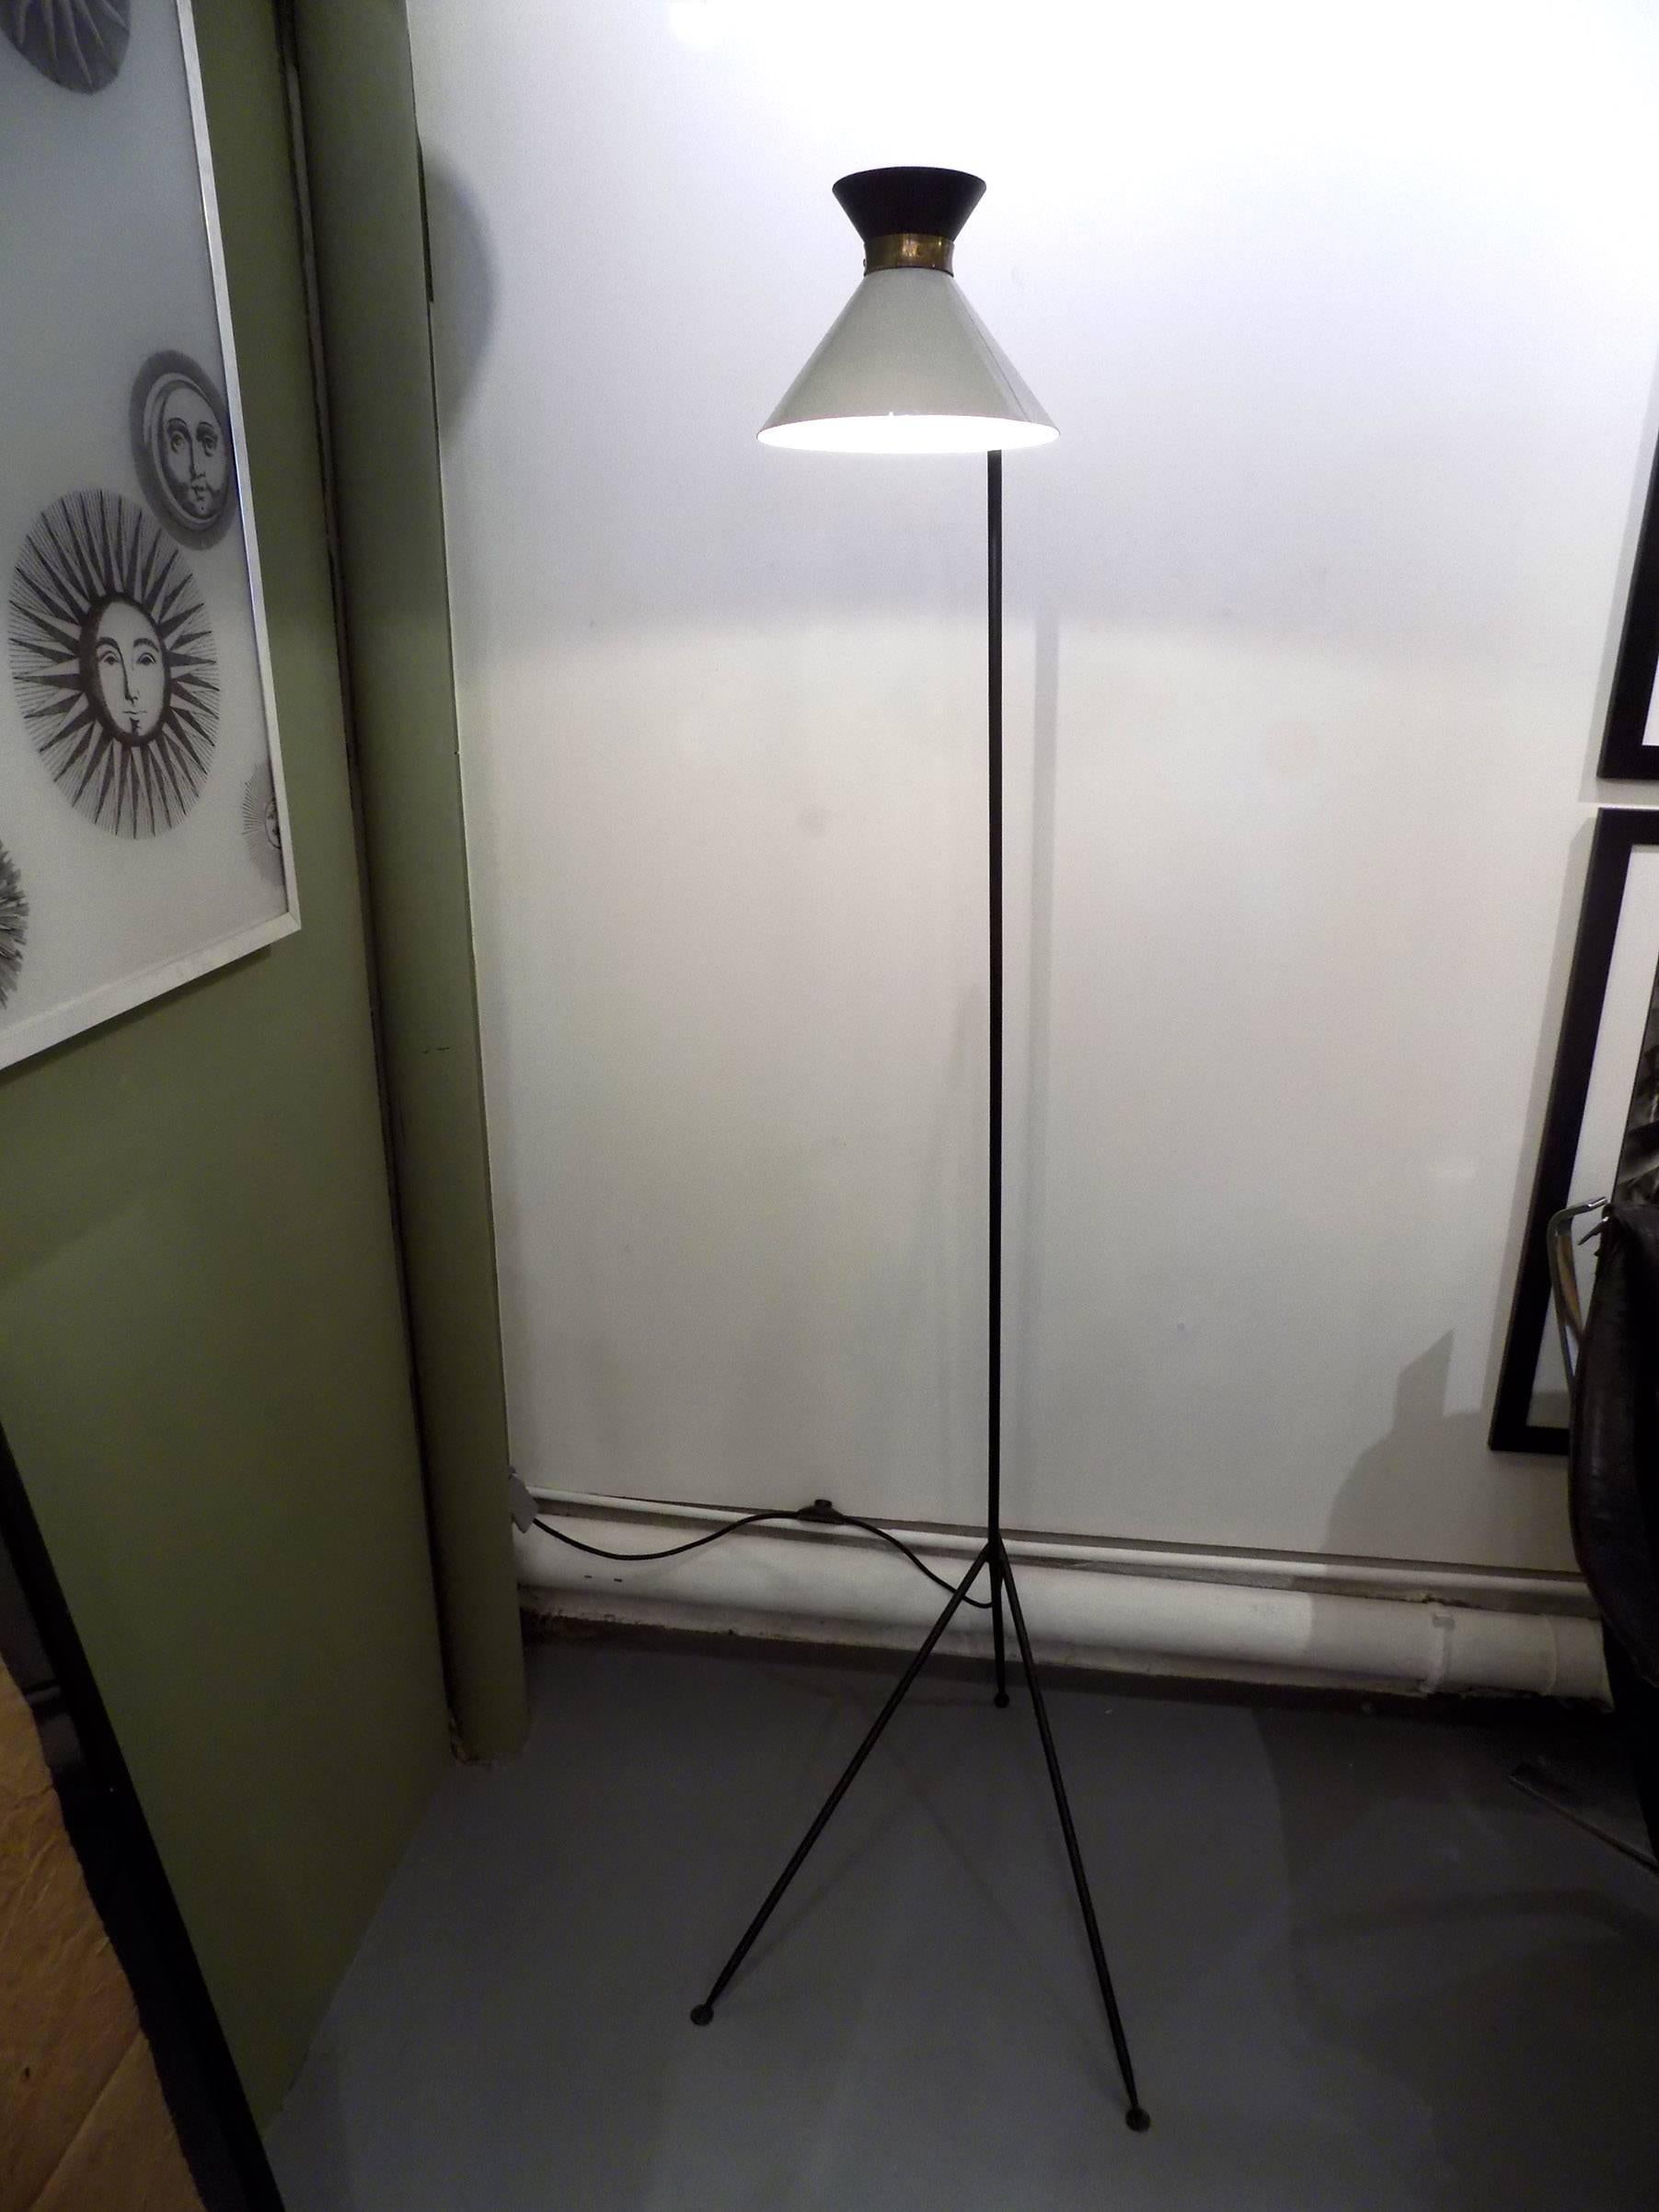 Stilnovo tripod floor lamp by Stilnovo
black and white lacquered shade.
Adjustable shade.